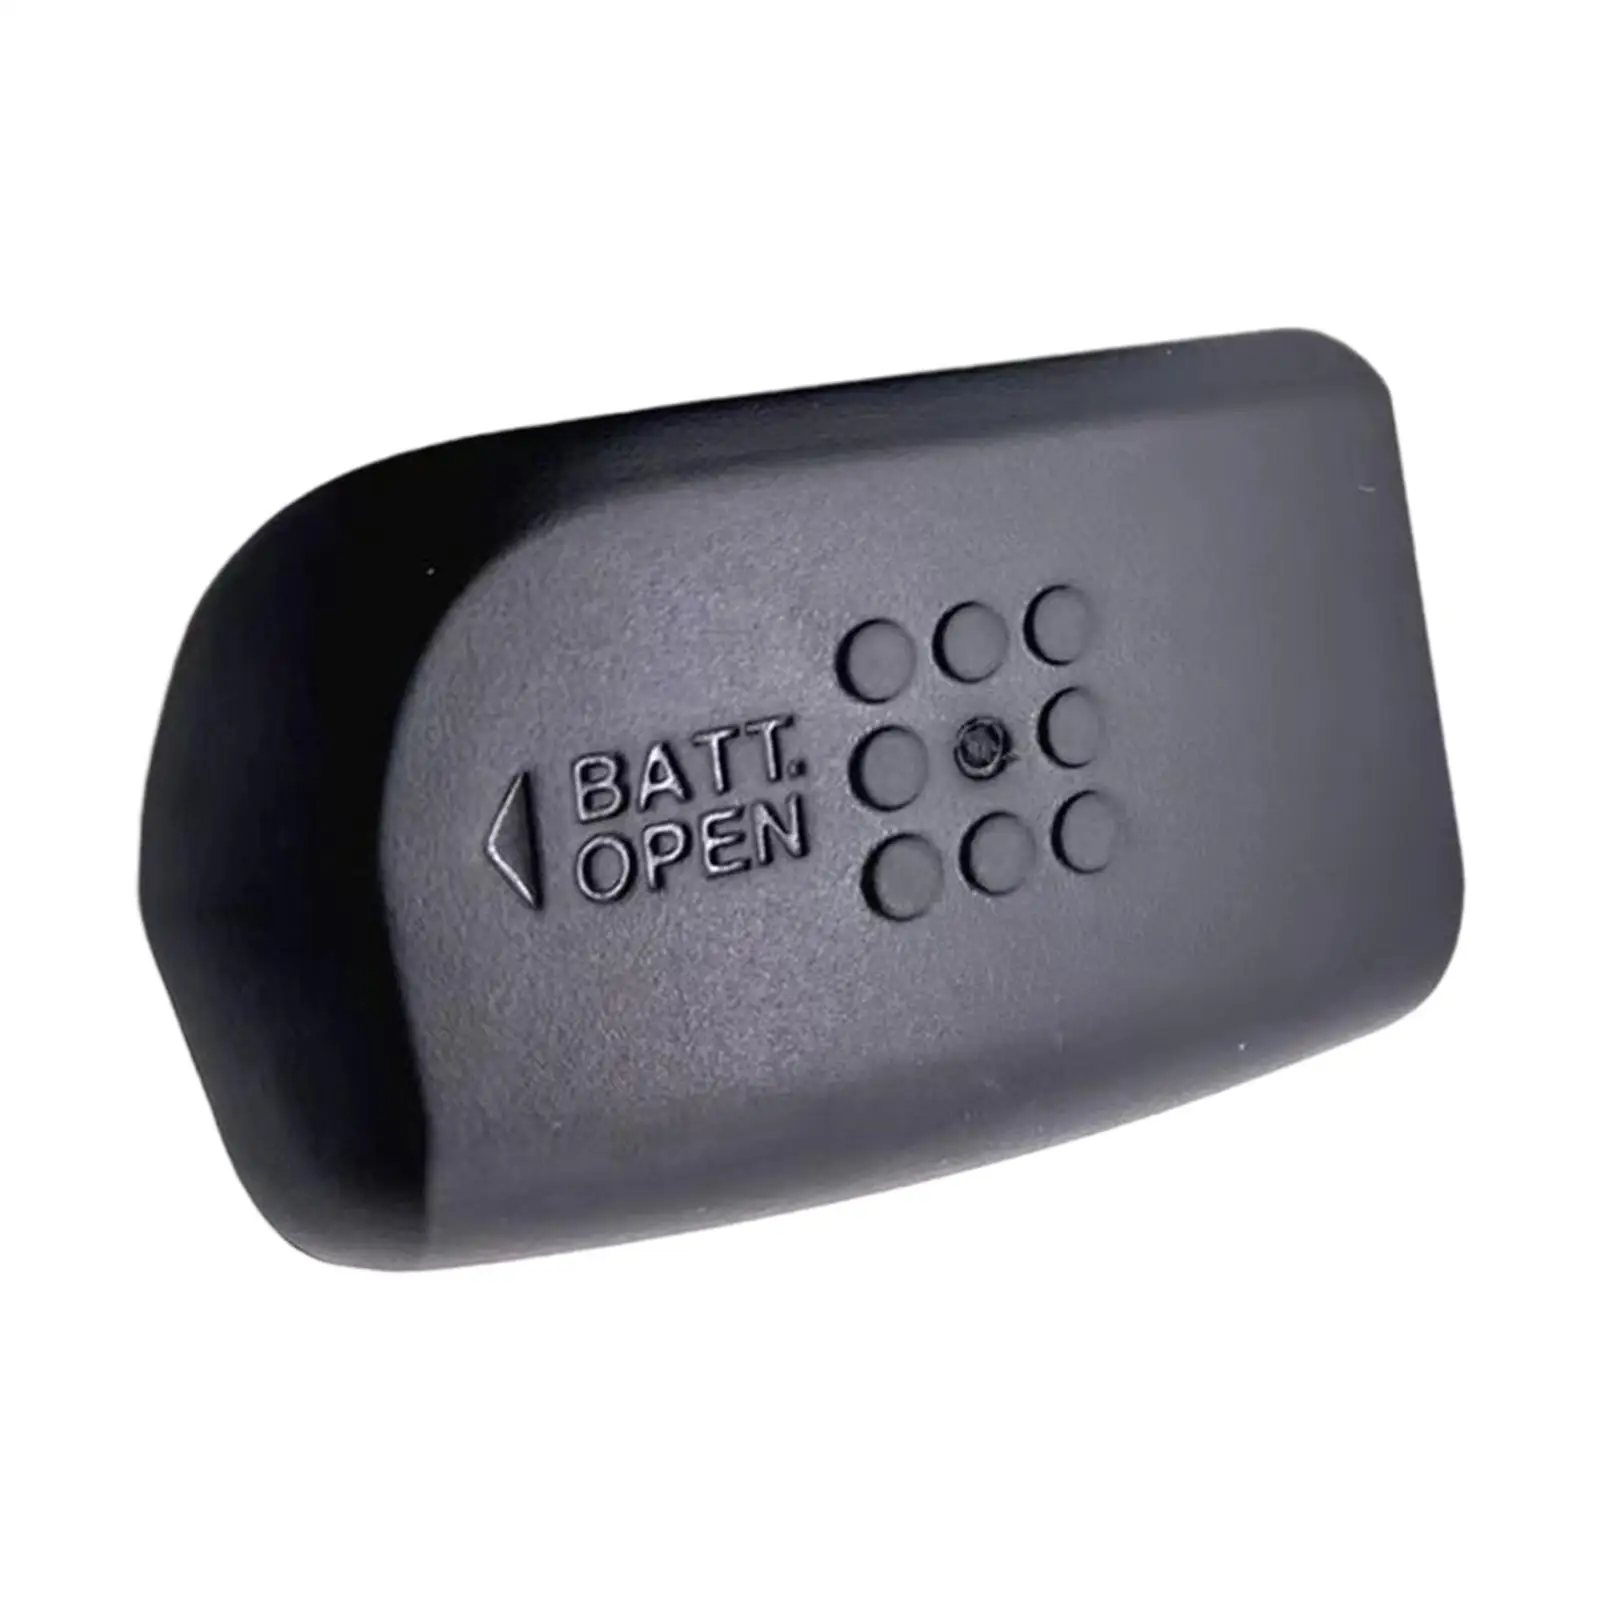 Digital Camera Battery Door Cover Professional Scratchproof Black Batteries Lid Cap for Yne3-Rt Yn-E3 RT Accessories Unit Repair